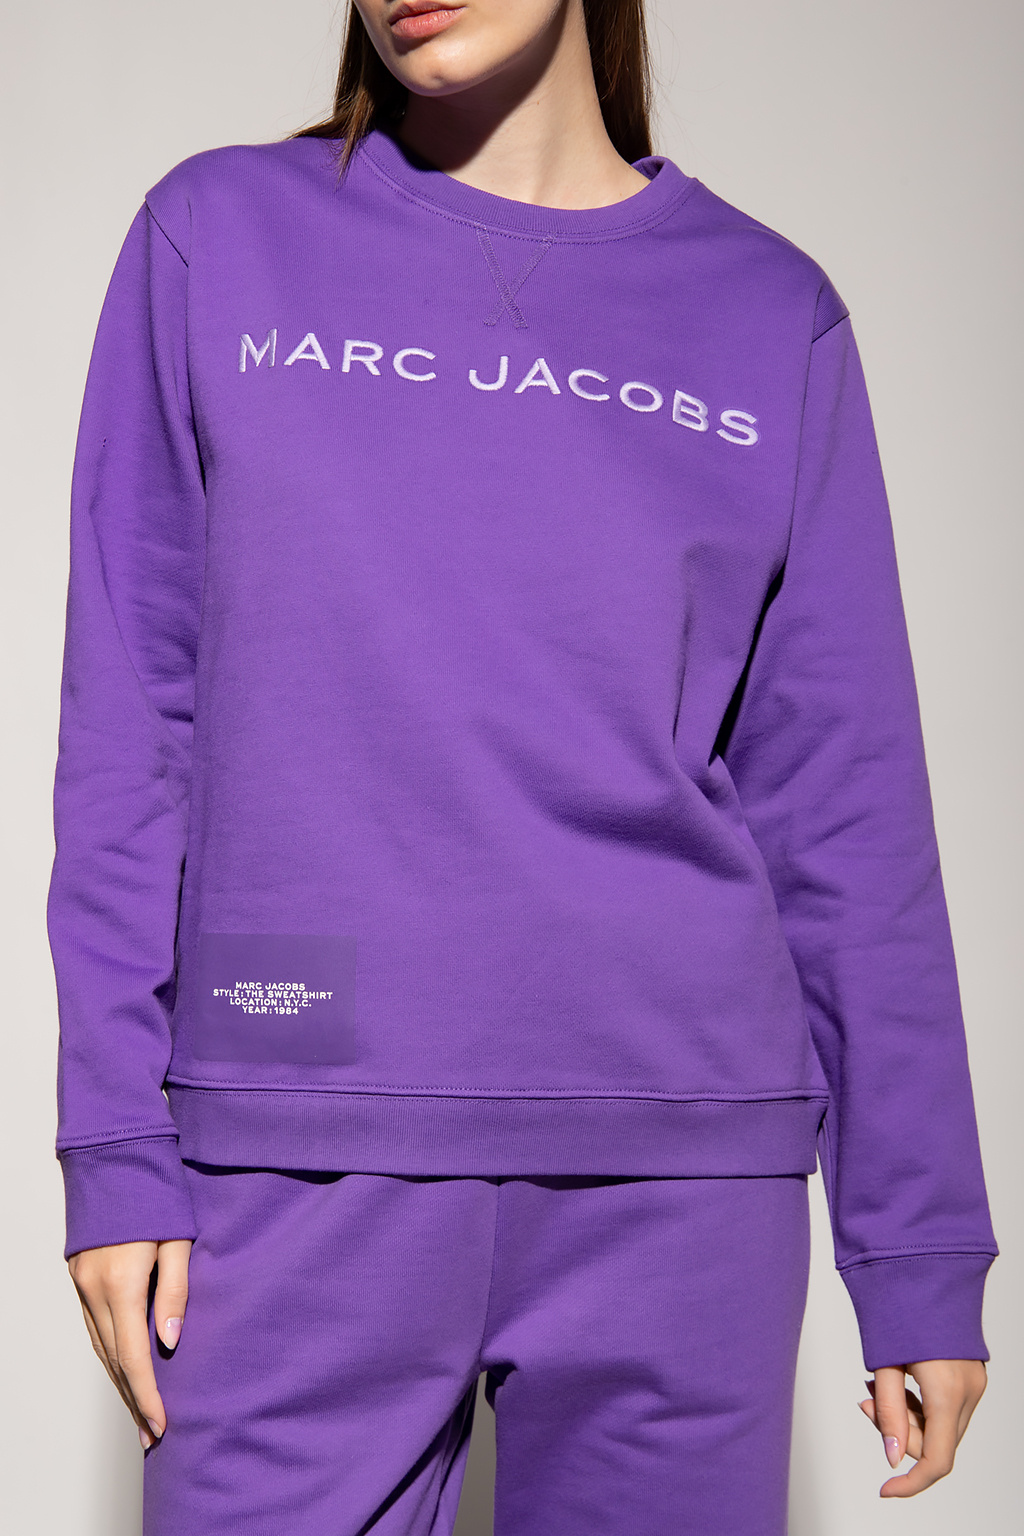 Marc Jacobs Nike Air Jordan 4 Retro University Blue UNC Gr